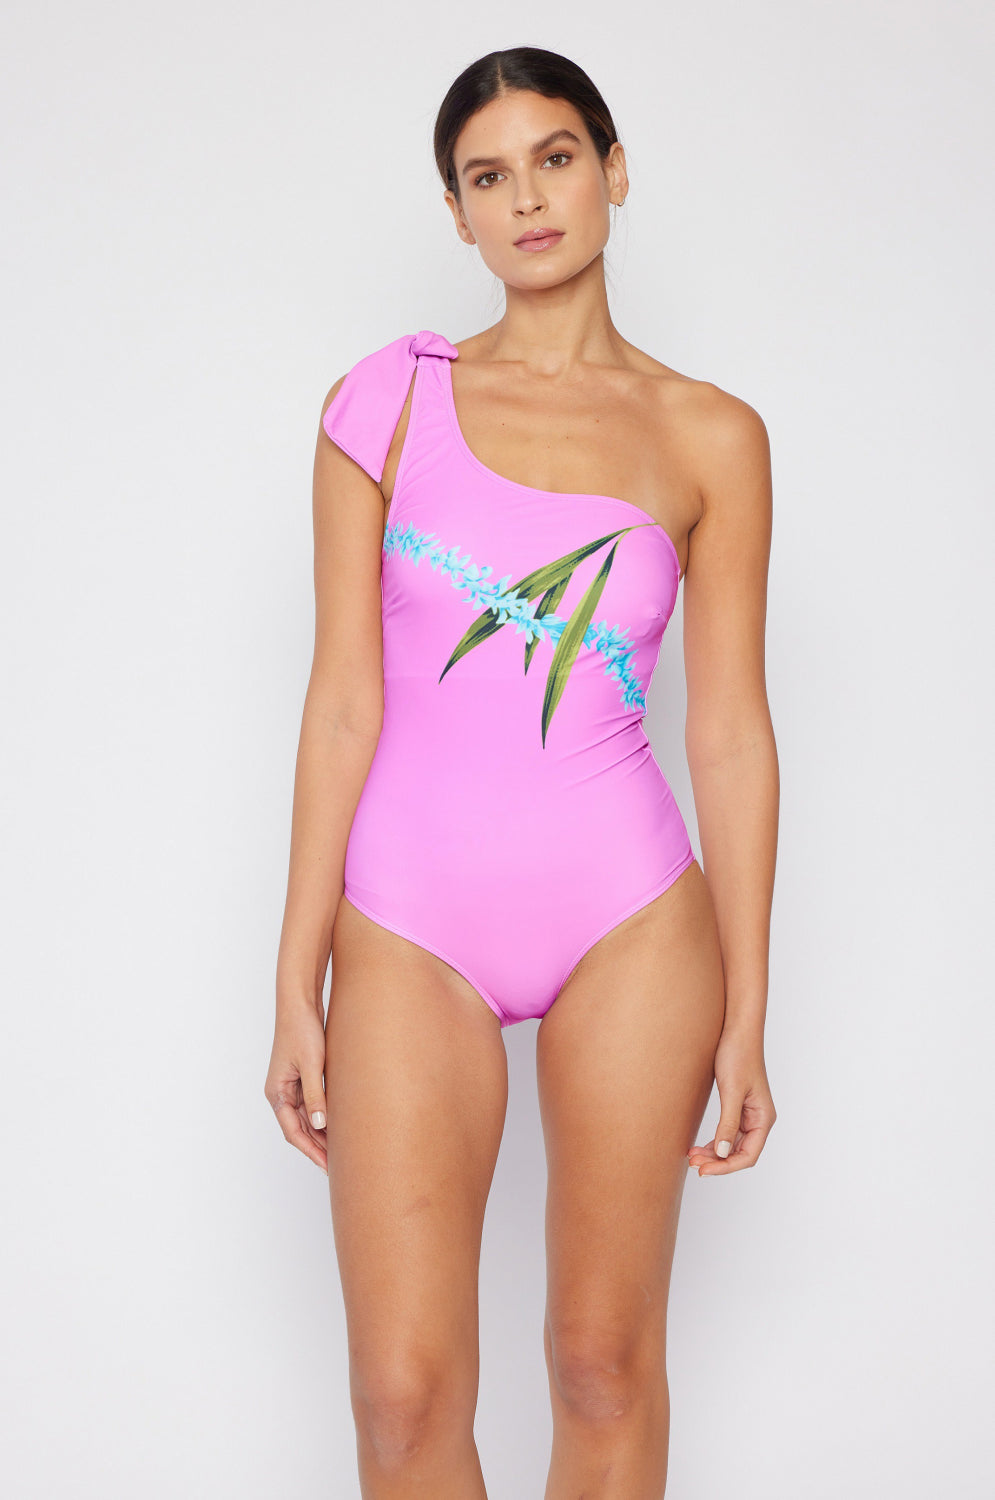 Marina West Swim Vacay Mode One Shoulder Swimsuit in Carnation Pink Marina West Swim